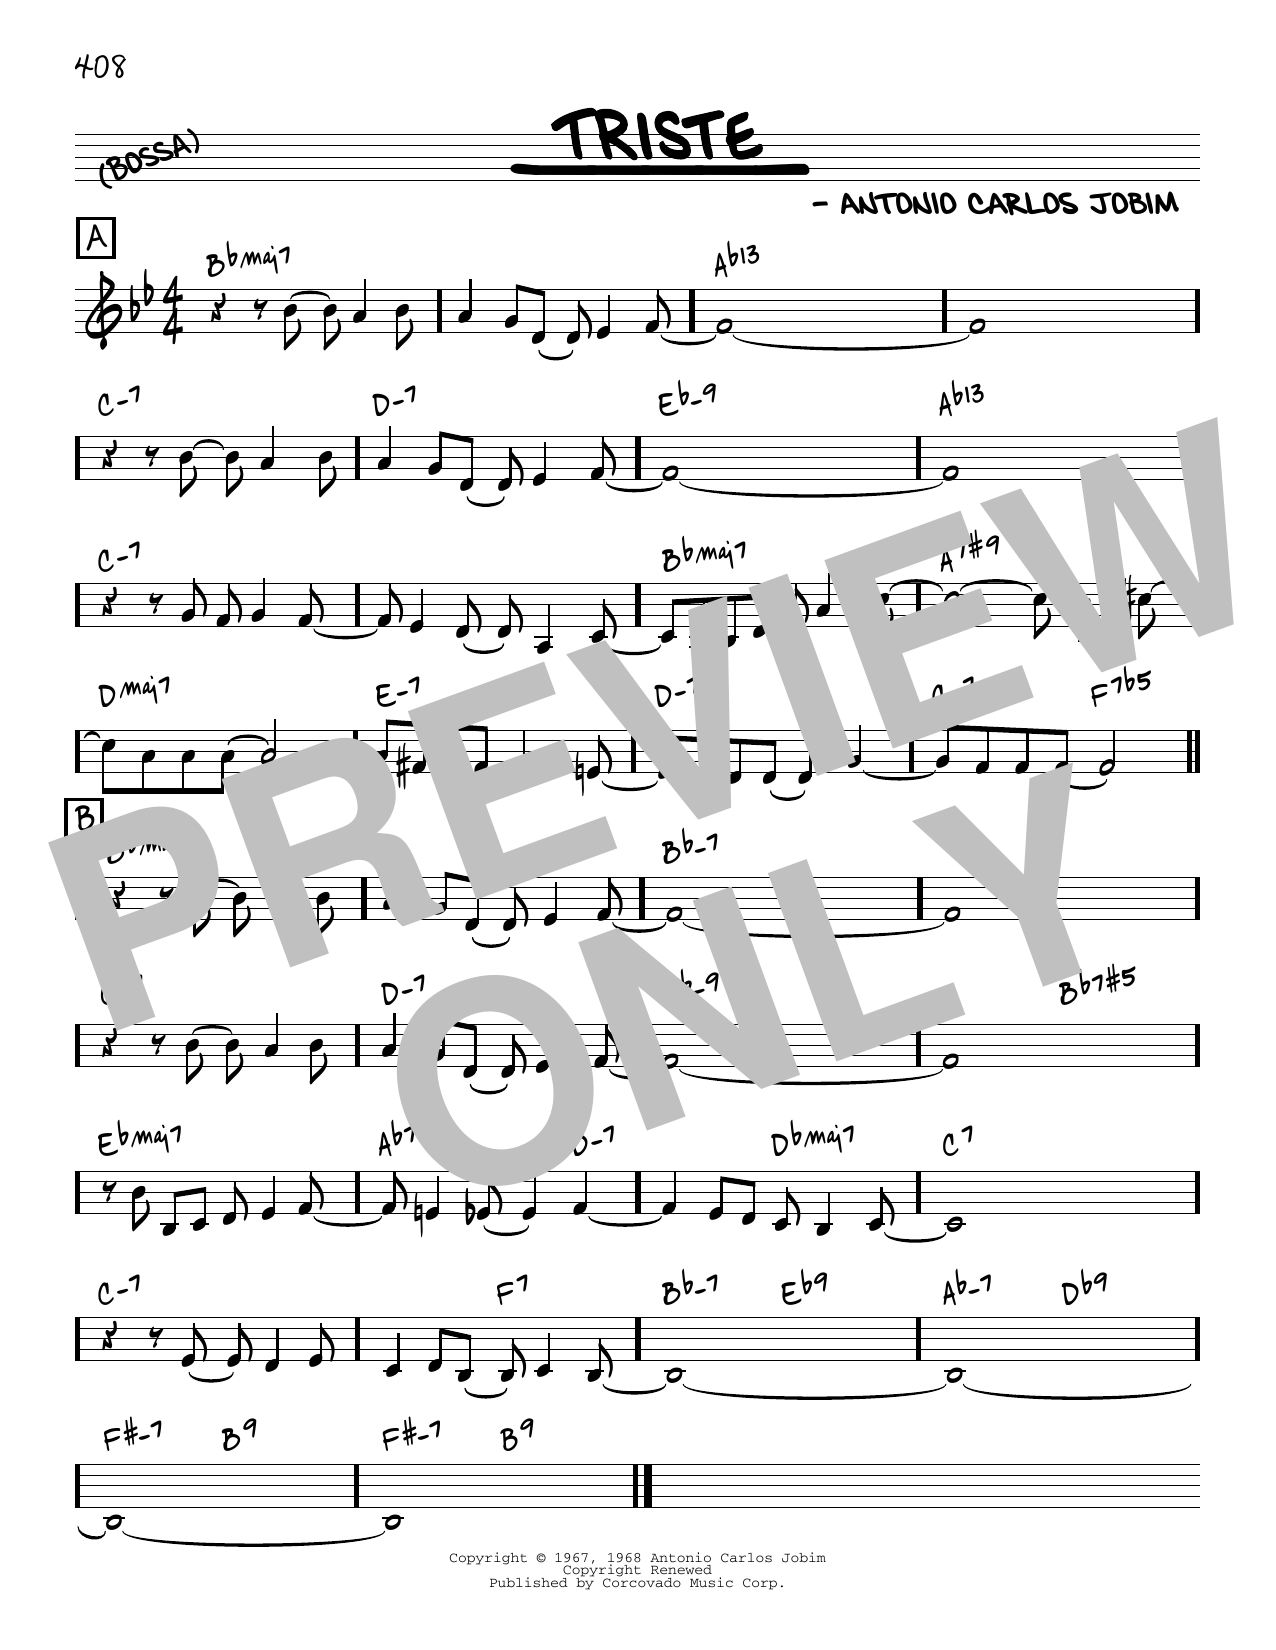 Antonio Carlos Jobim Triste [Reharmonized version] (arr. Jack Grassel) Sheet Music Notes & Chords for Real Book – Melody & Chords - Download or Print PDF